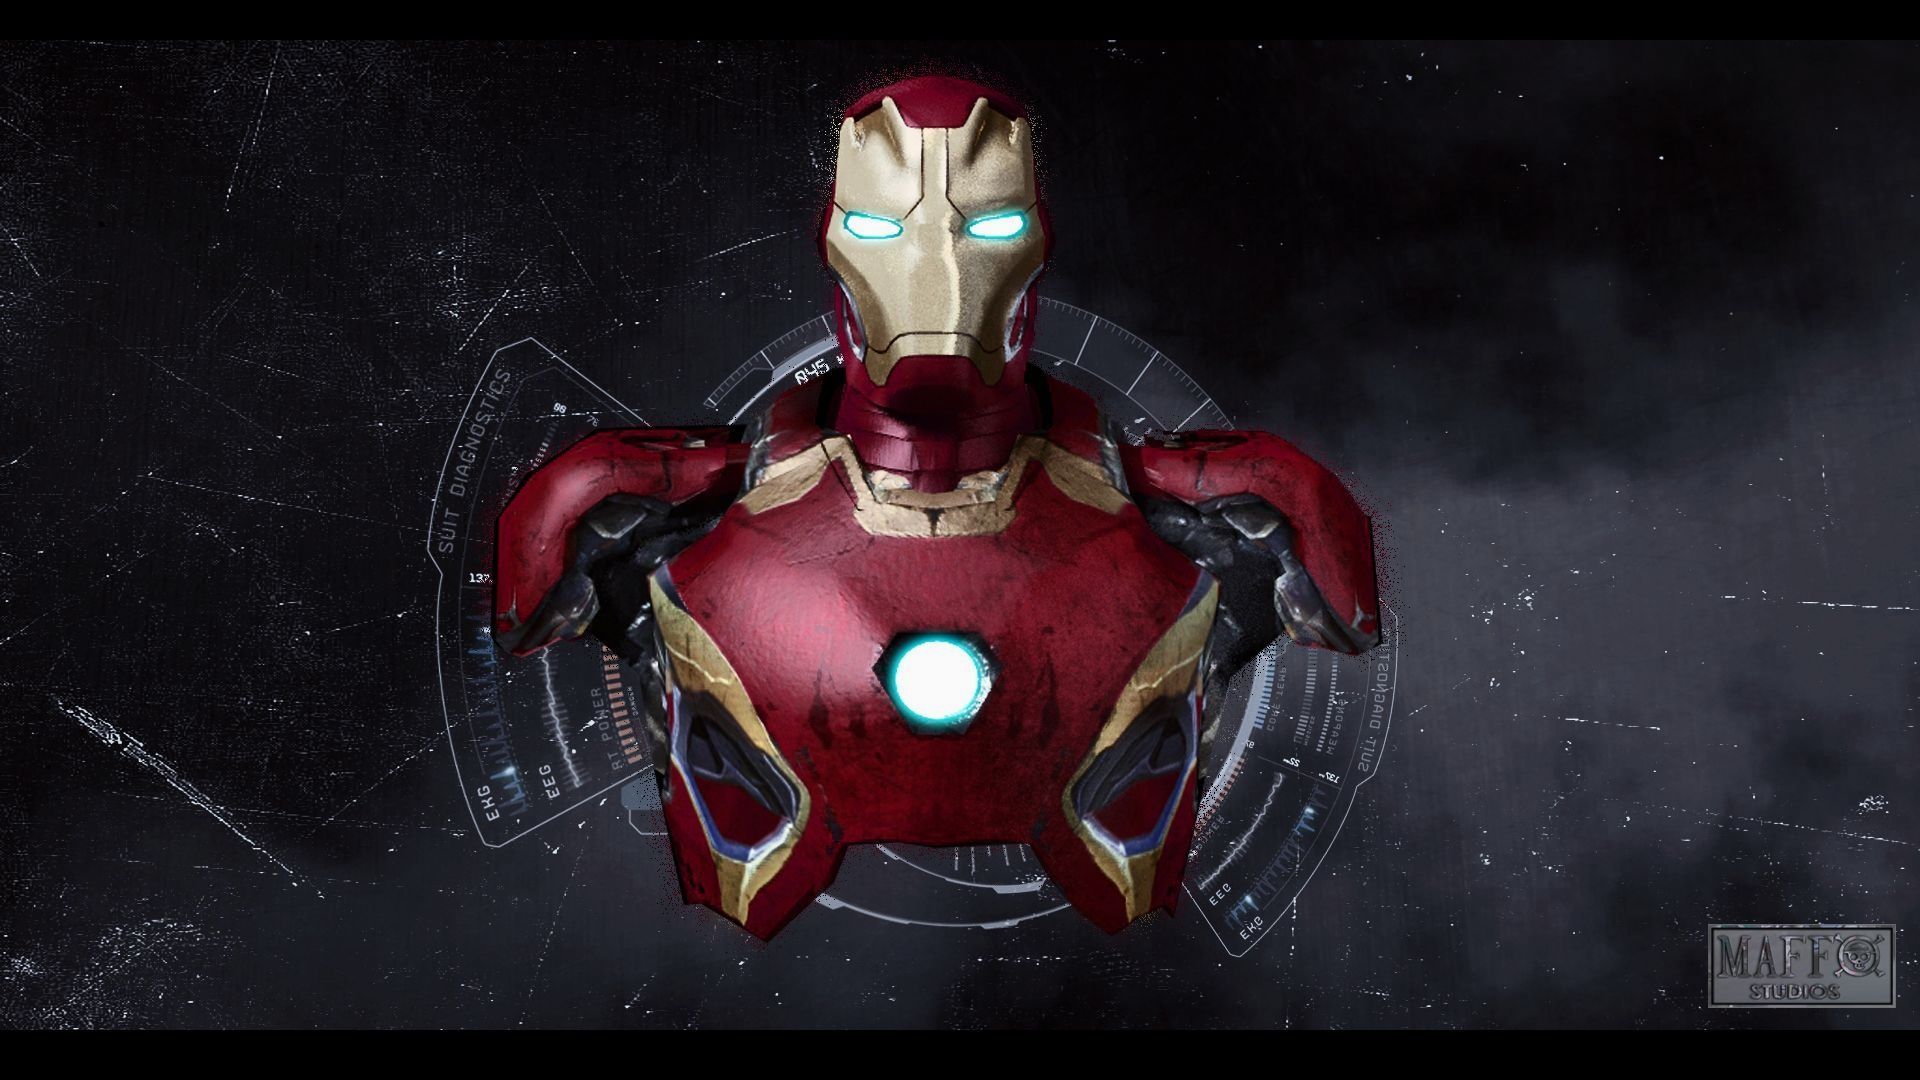 Iron Man Live Wallpaper